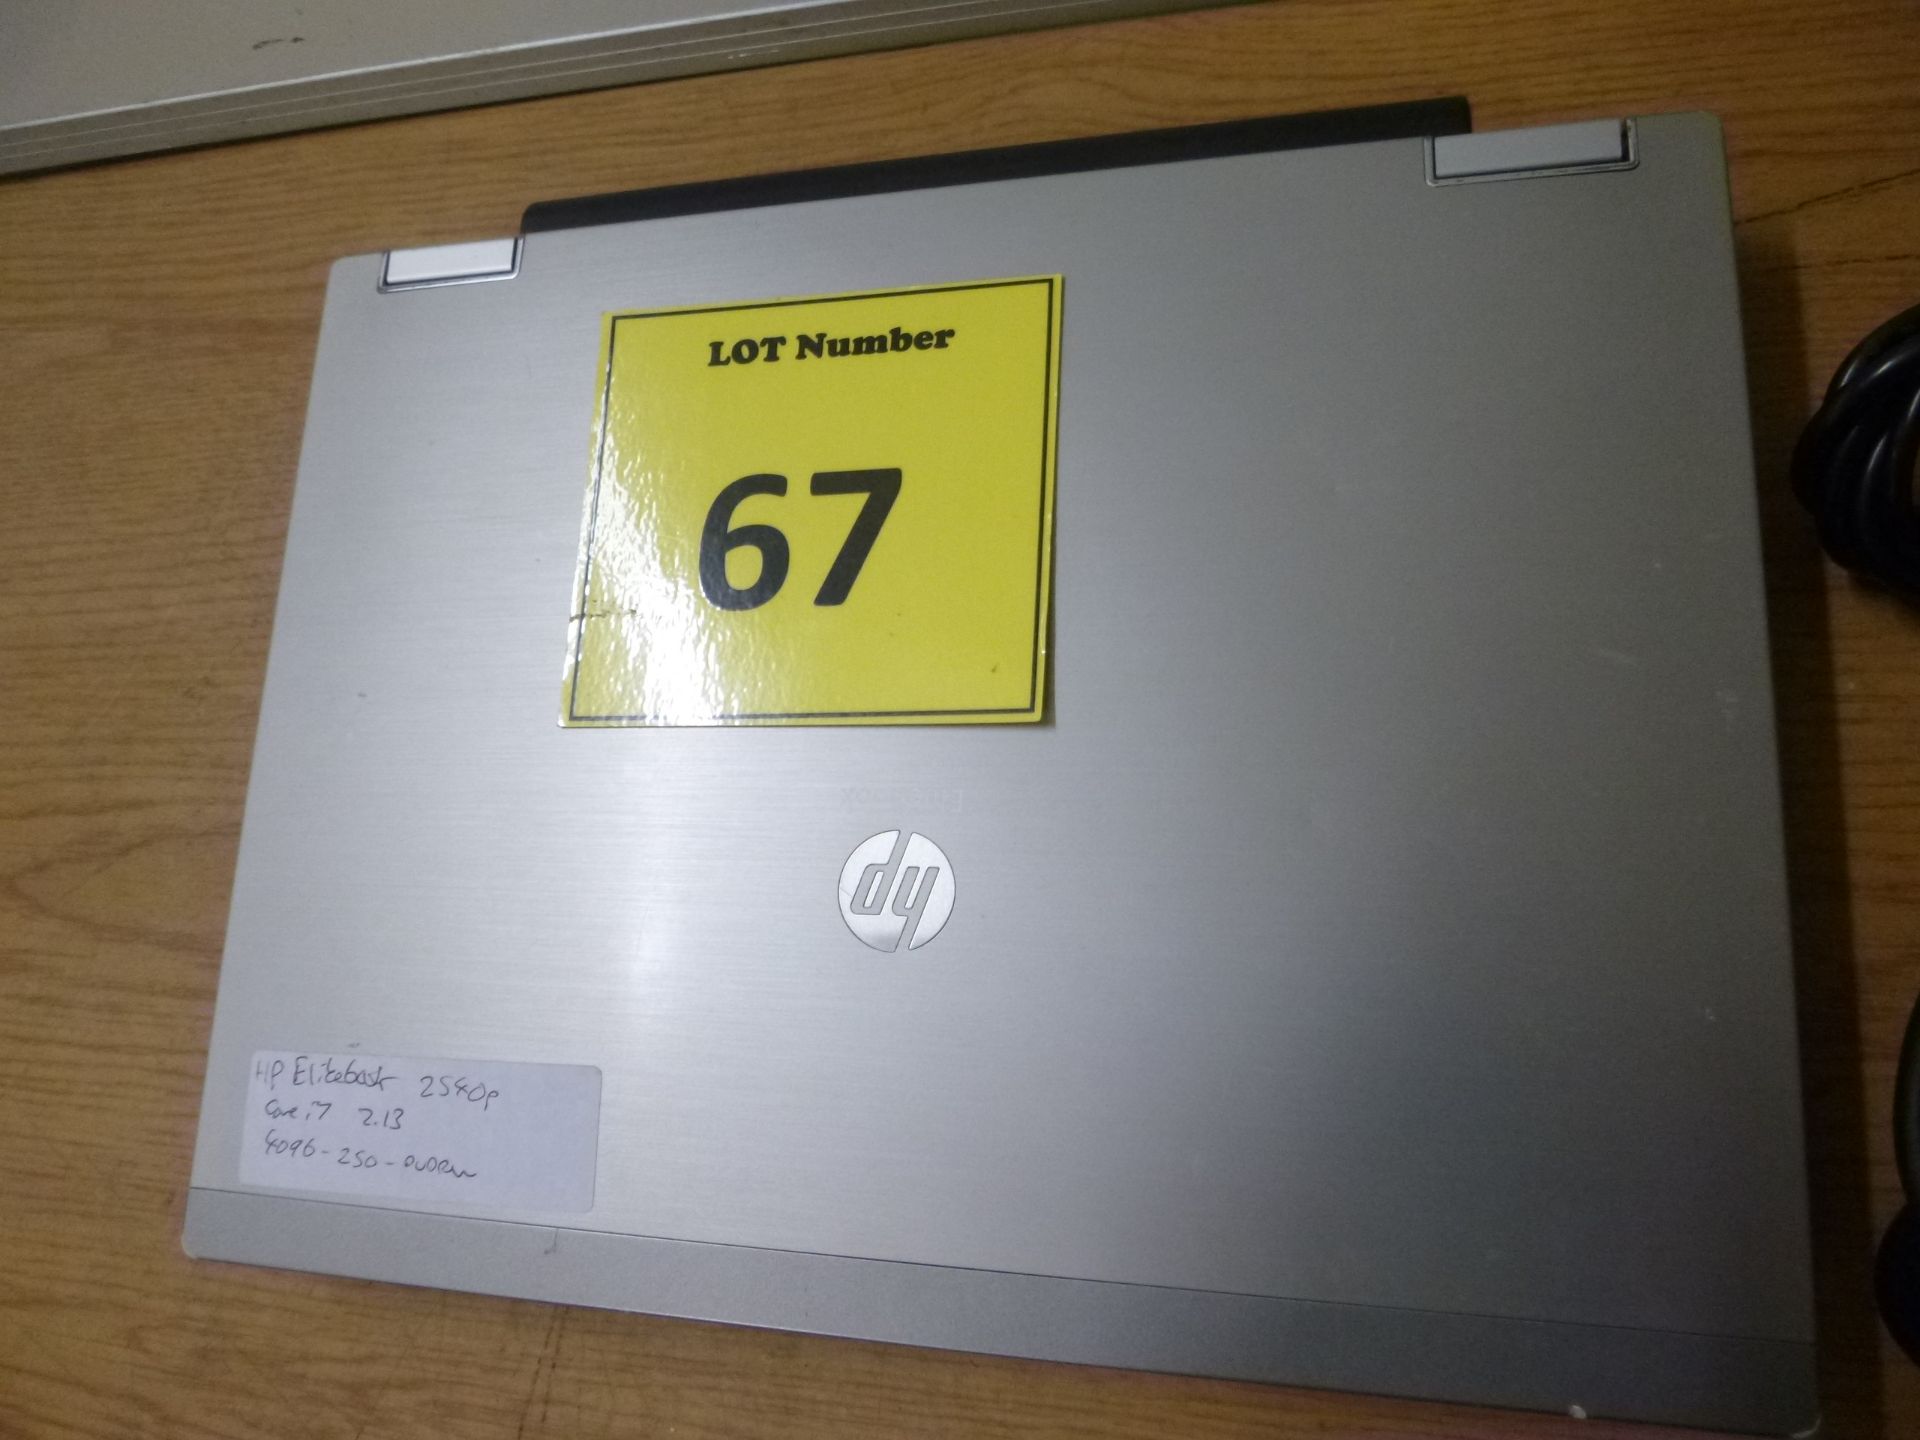 HP ELITEBOOK 2540P LAPTOP. CORE i7 2.13GHZ PROCESSOR, 4GB RAM, 250GB HDD, DVDRW. WITH PSU. W7 PRO - Image 2 of 4